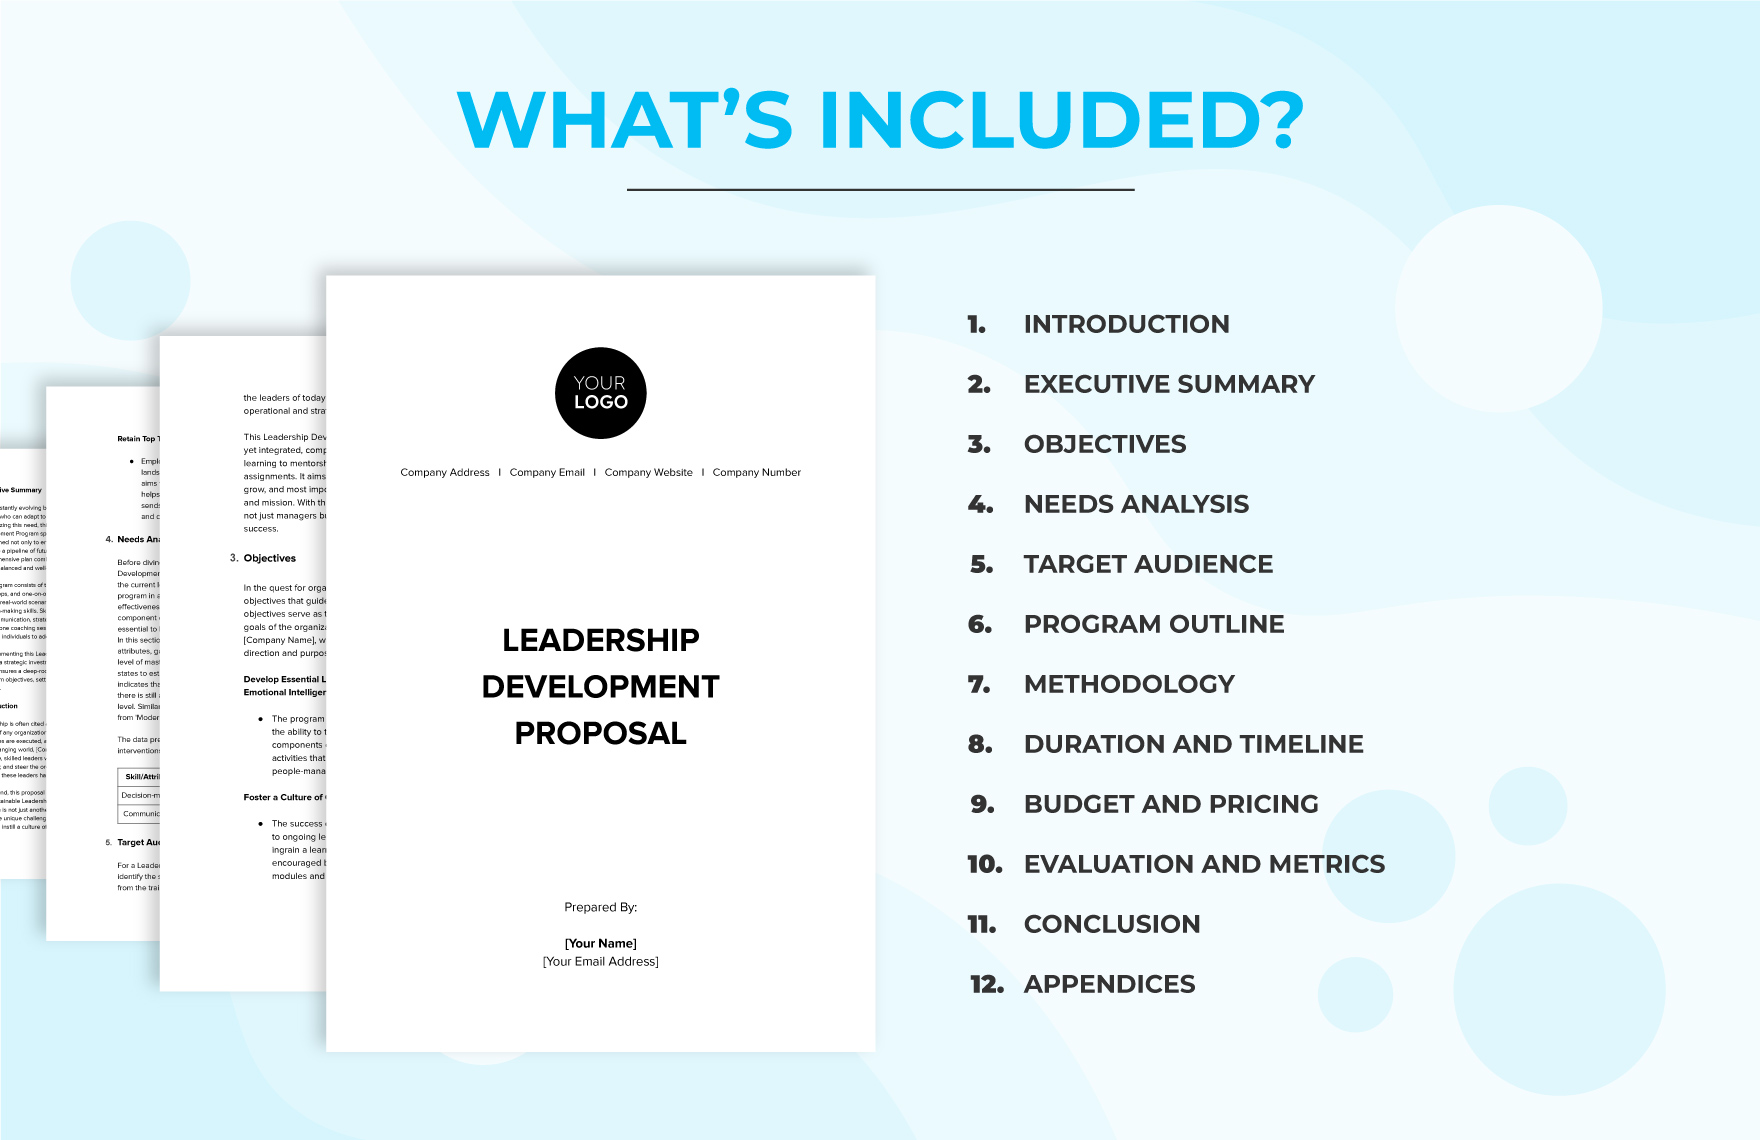 Leadership Development Proposal HR Template